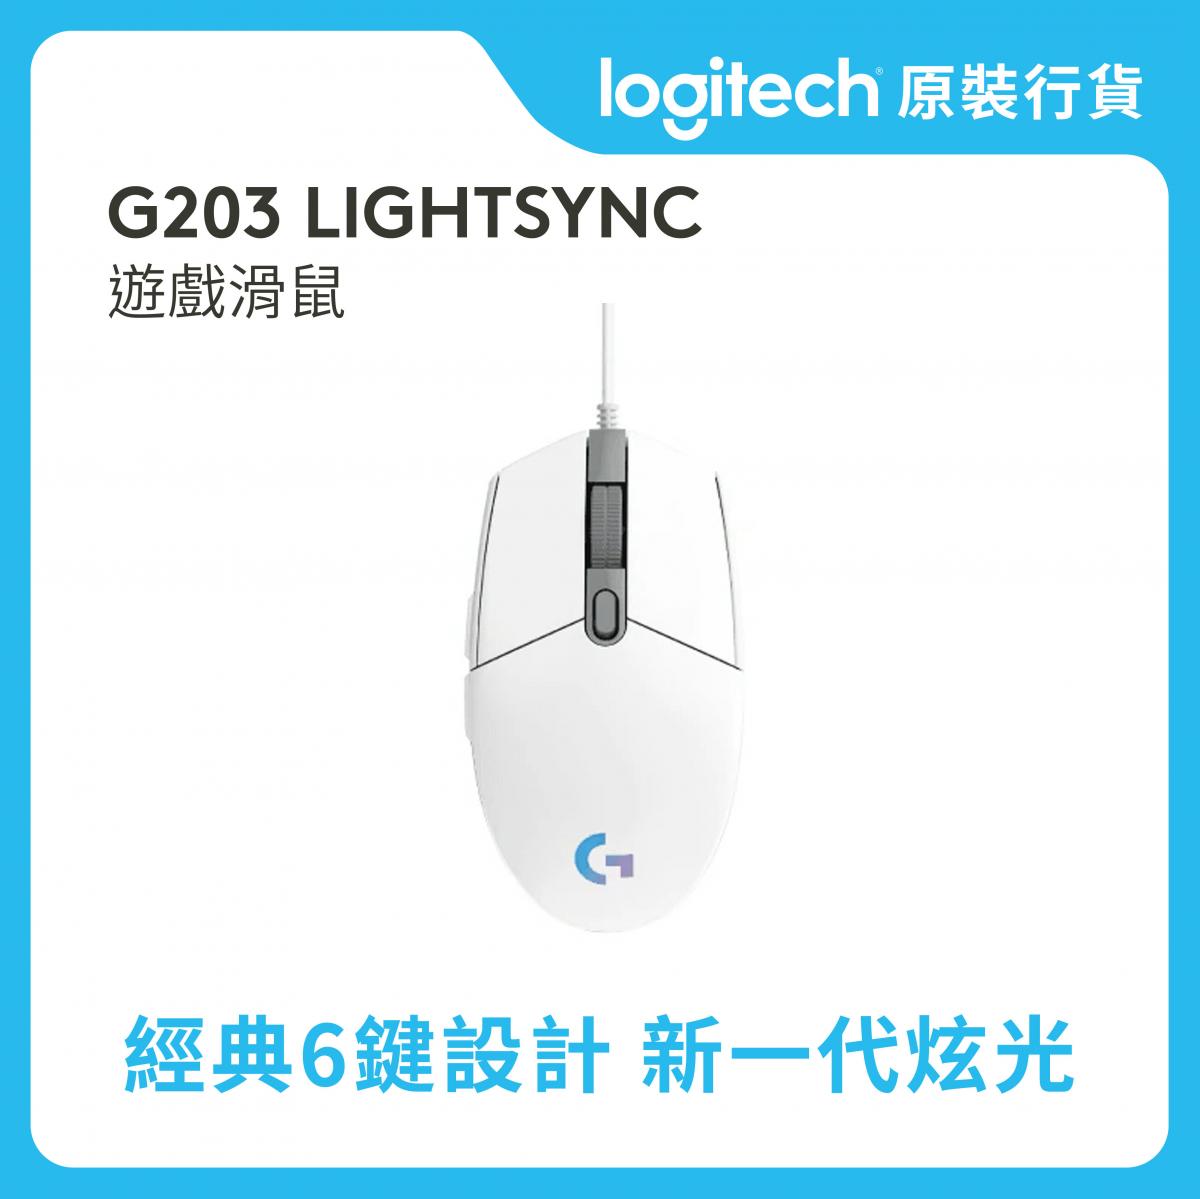 G203 LIGHTSYNC GAMING MOUSE - WHITE #910-005791